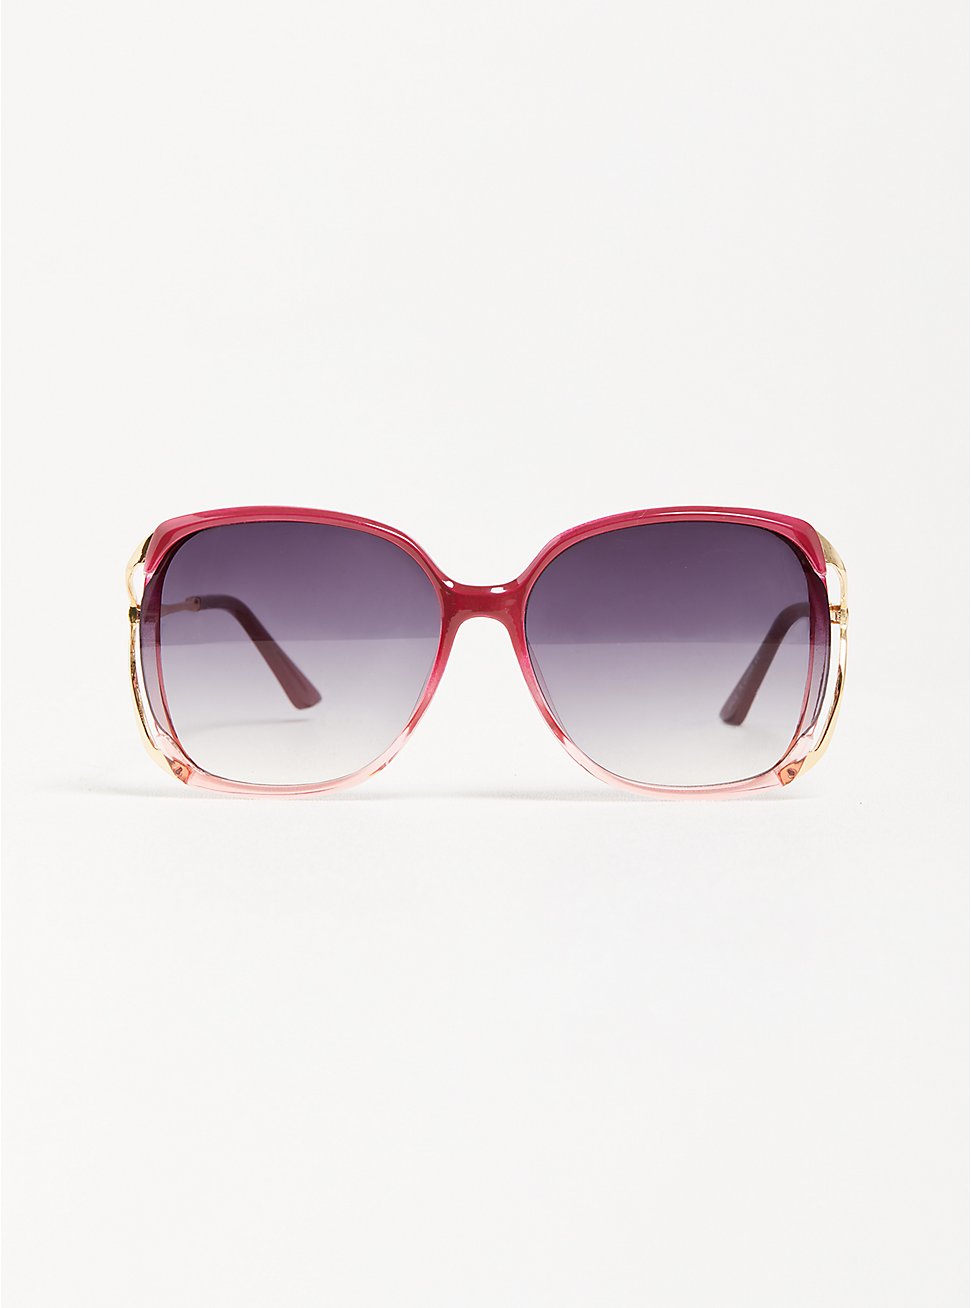 Square Cut-Out Sunglasses - Burgundy Fade, , hi-res